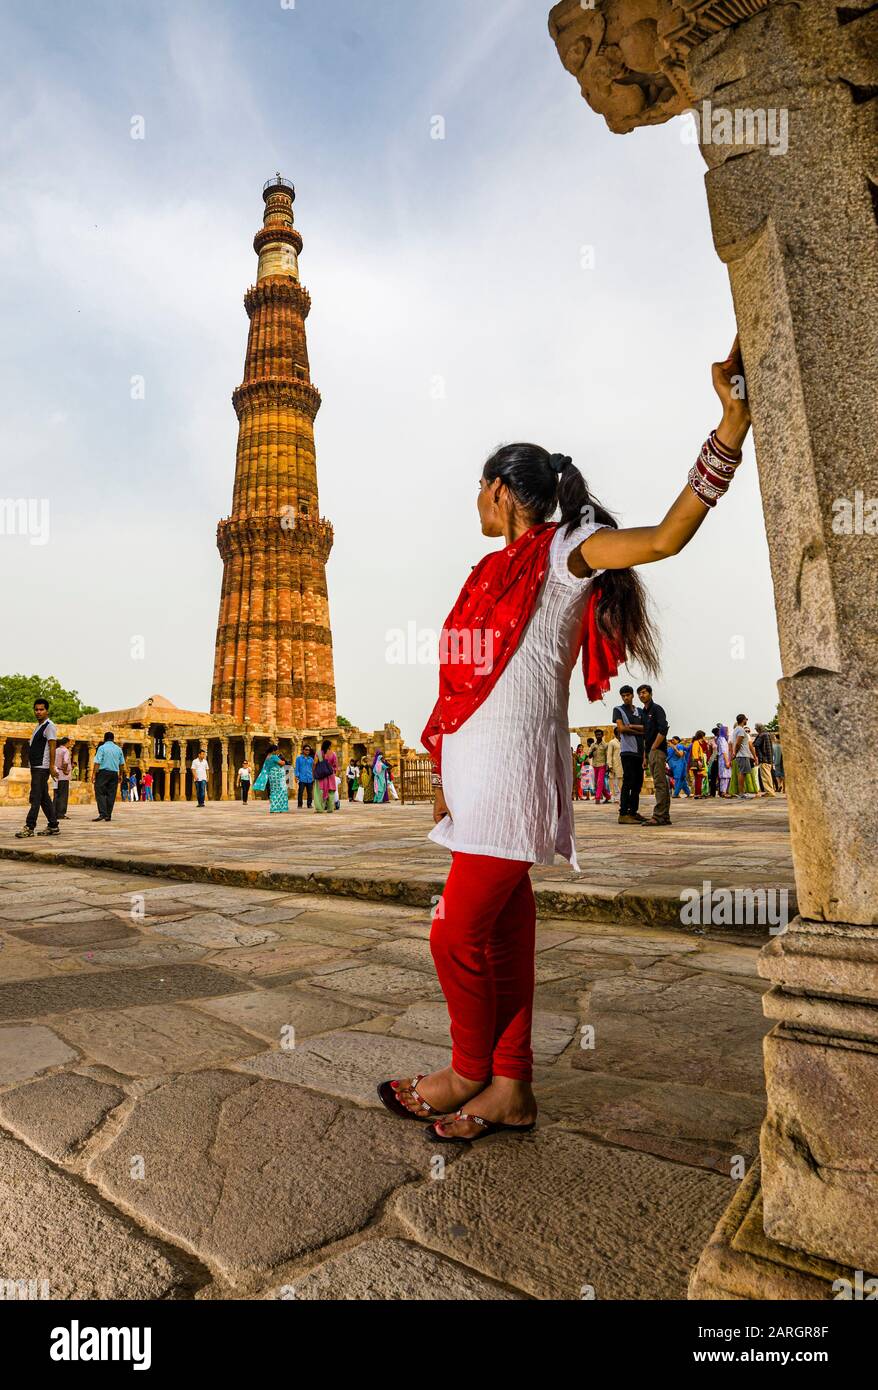 Jeune femme regardant Qutub Minar, également connue sous le nom de Qutb Minar et Qutab Minar, un ancien monument islamique à Delhi Banque D'Images